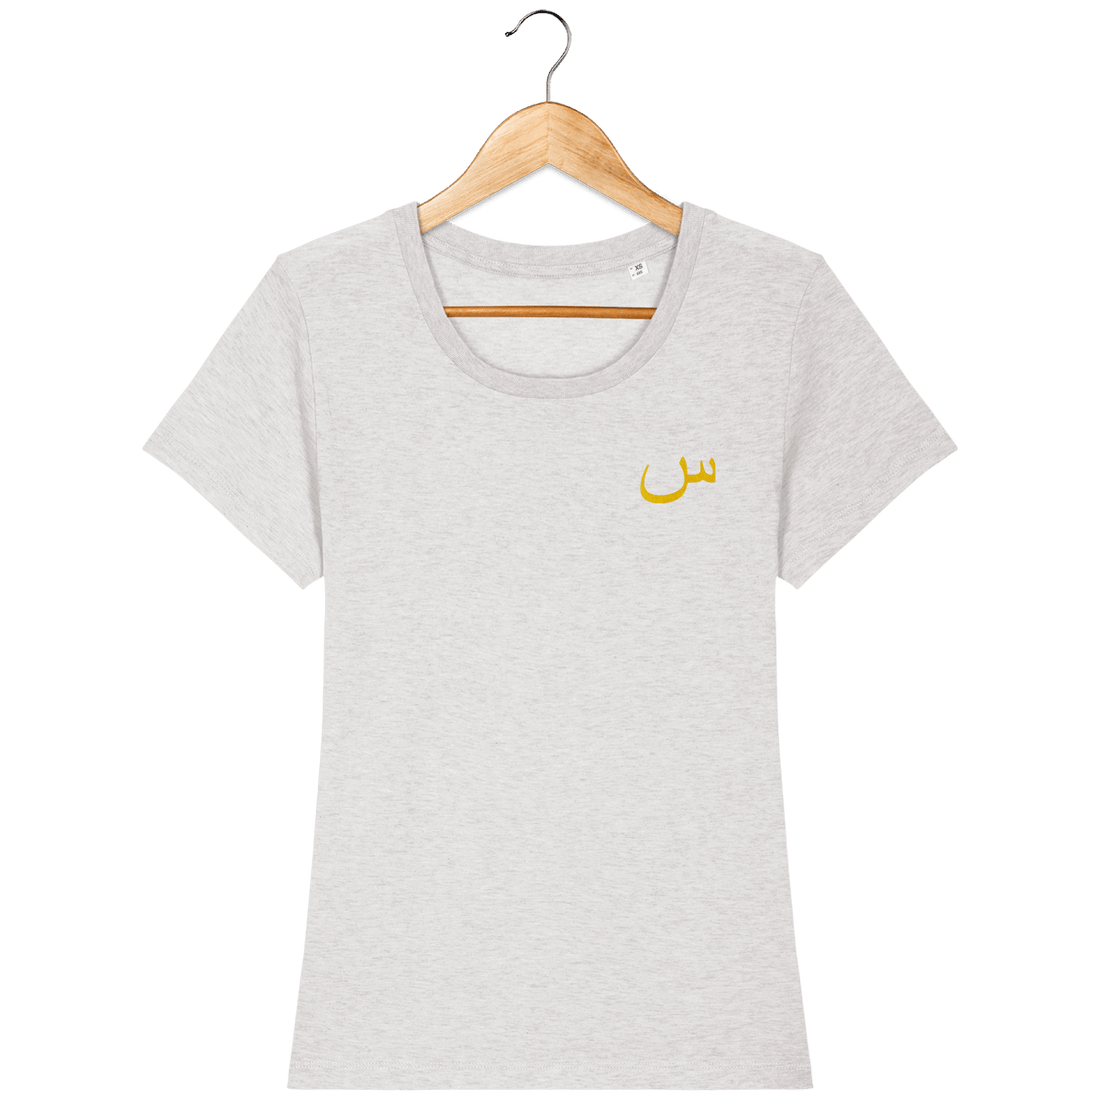 Femme>Tee-shirts - T-Shirt Femme <br> Lettre Arabe Siin